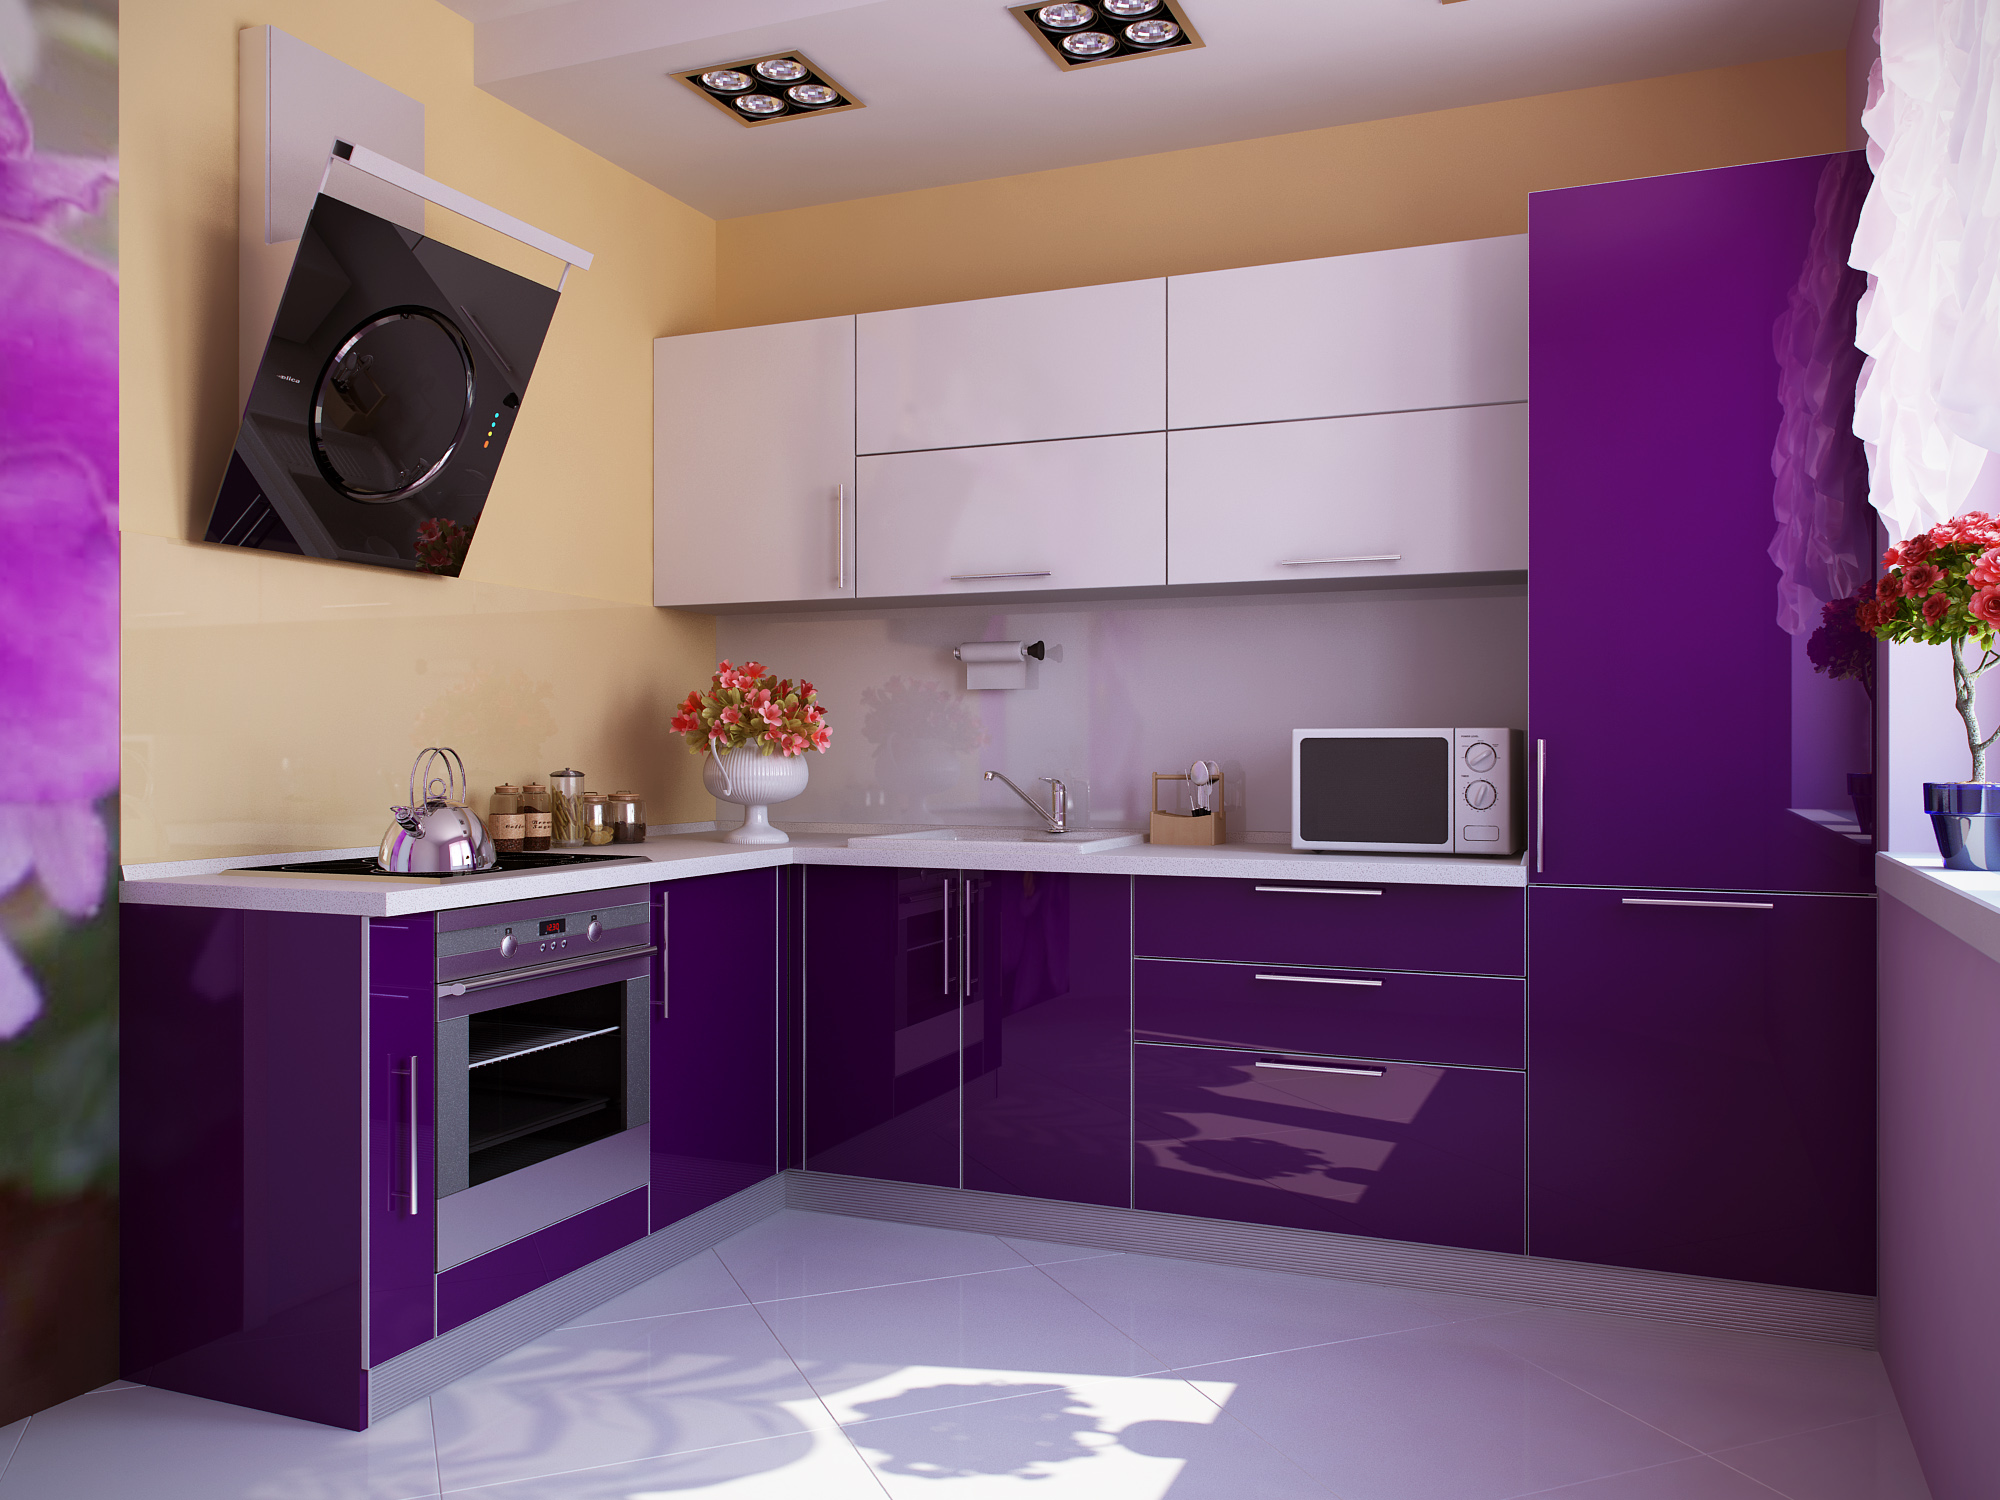 beautiful kitchen style in purple